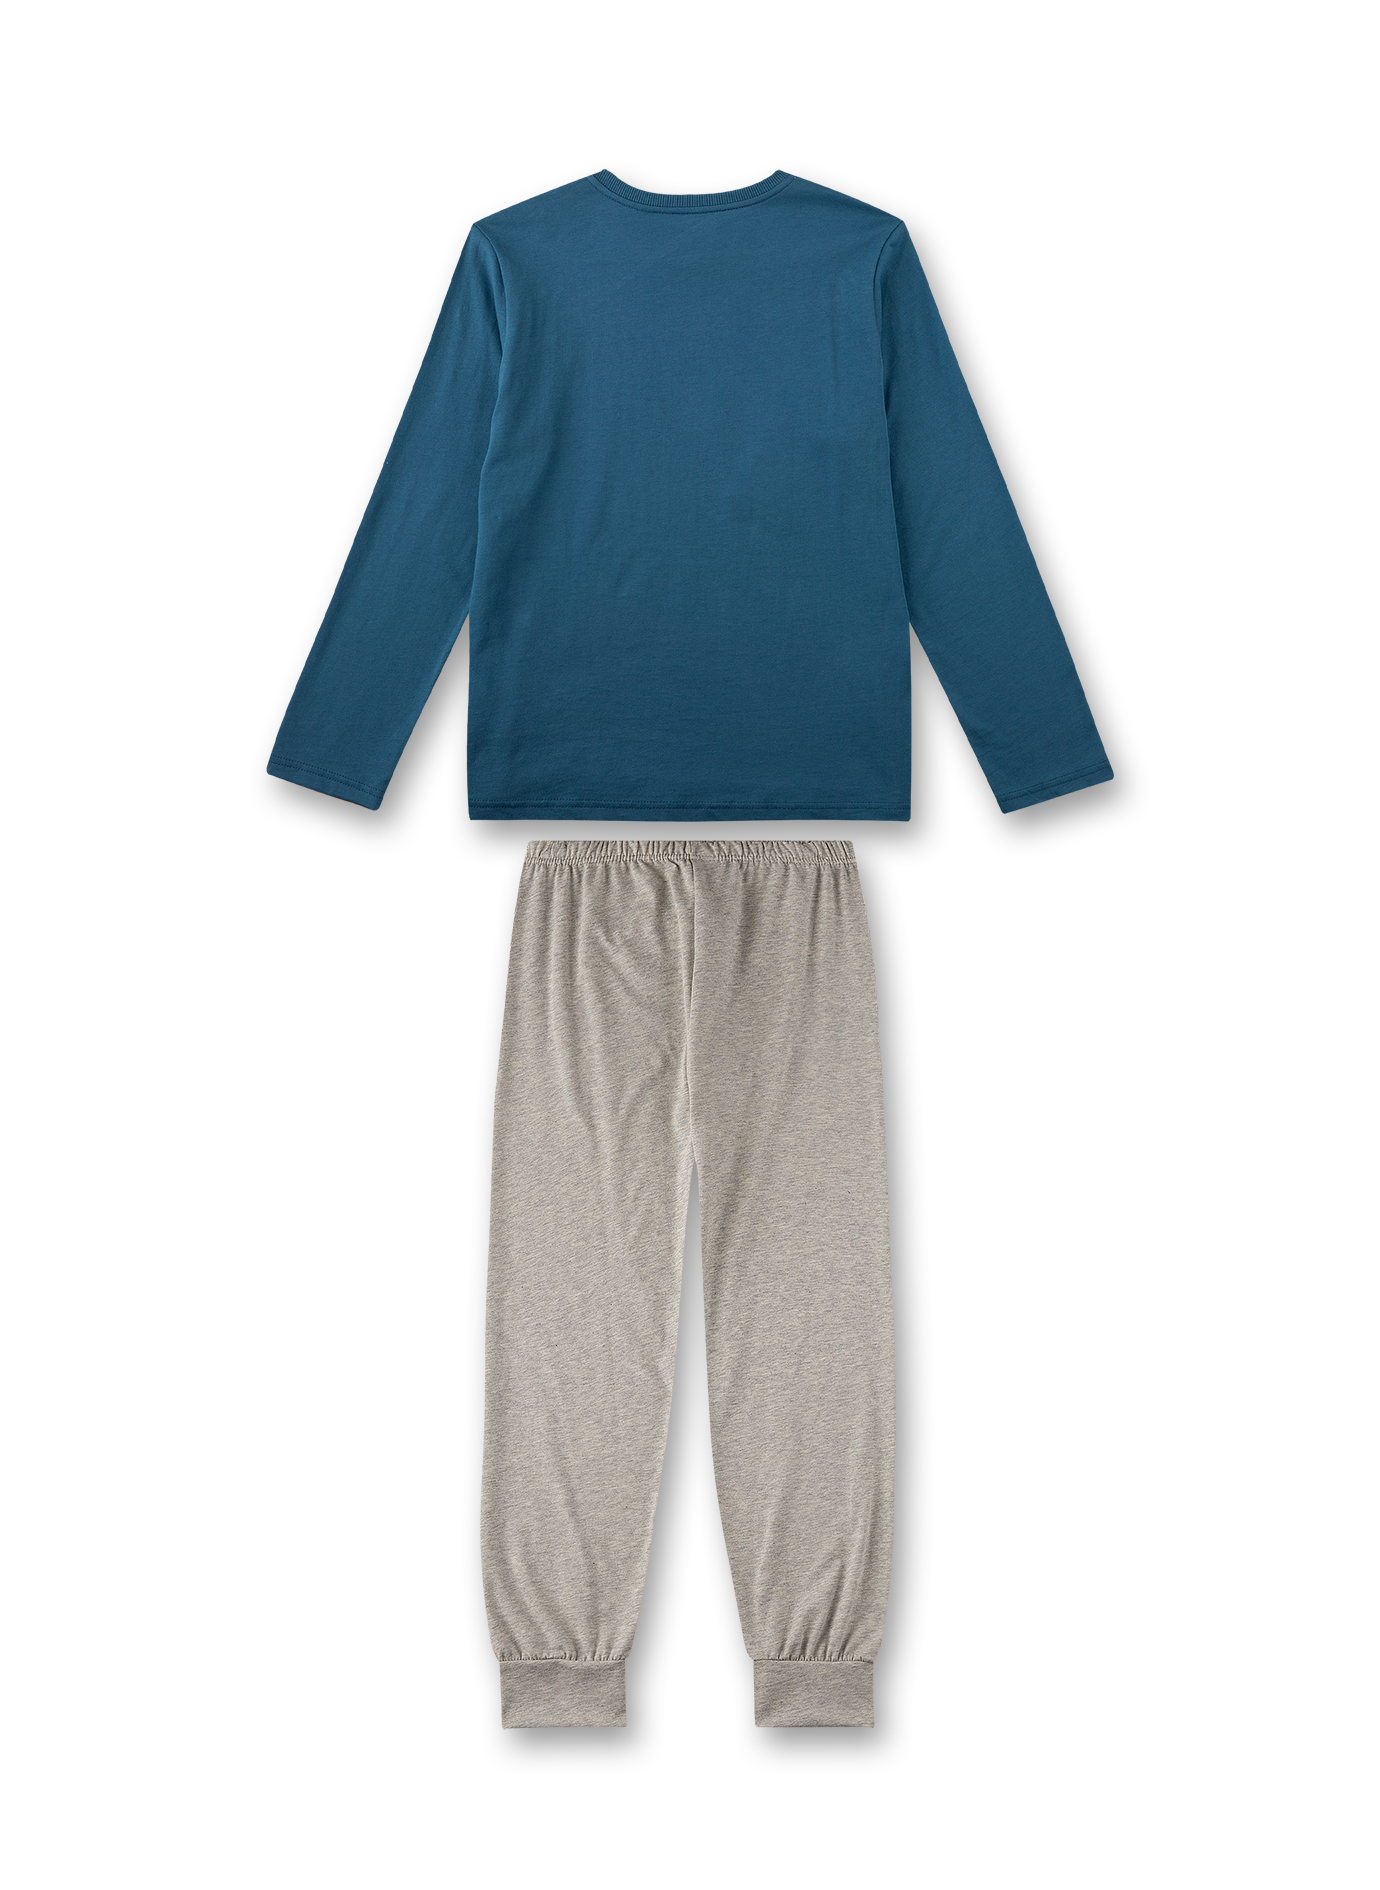 Jungen-Schlafanzug lang Blau